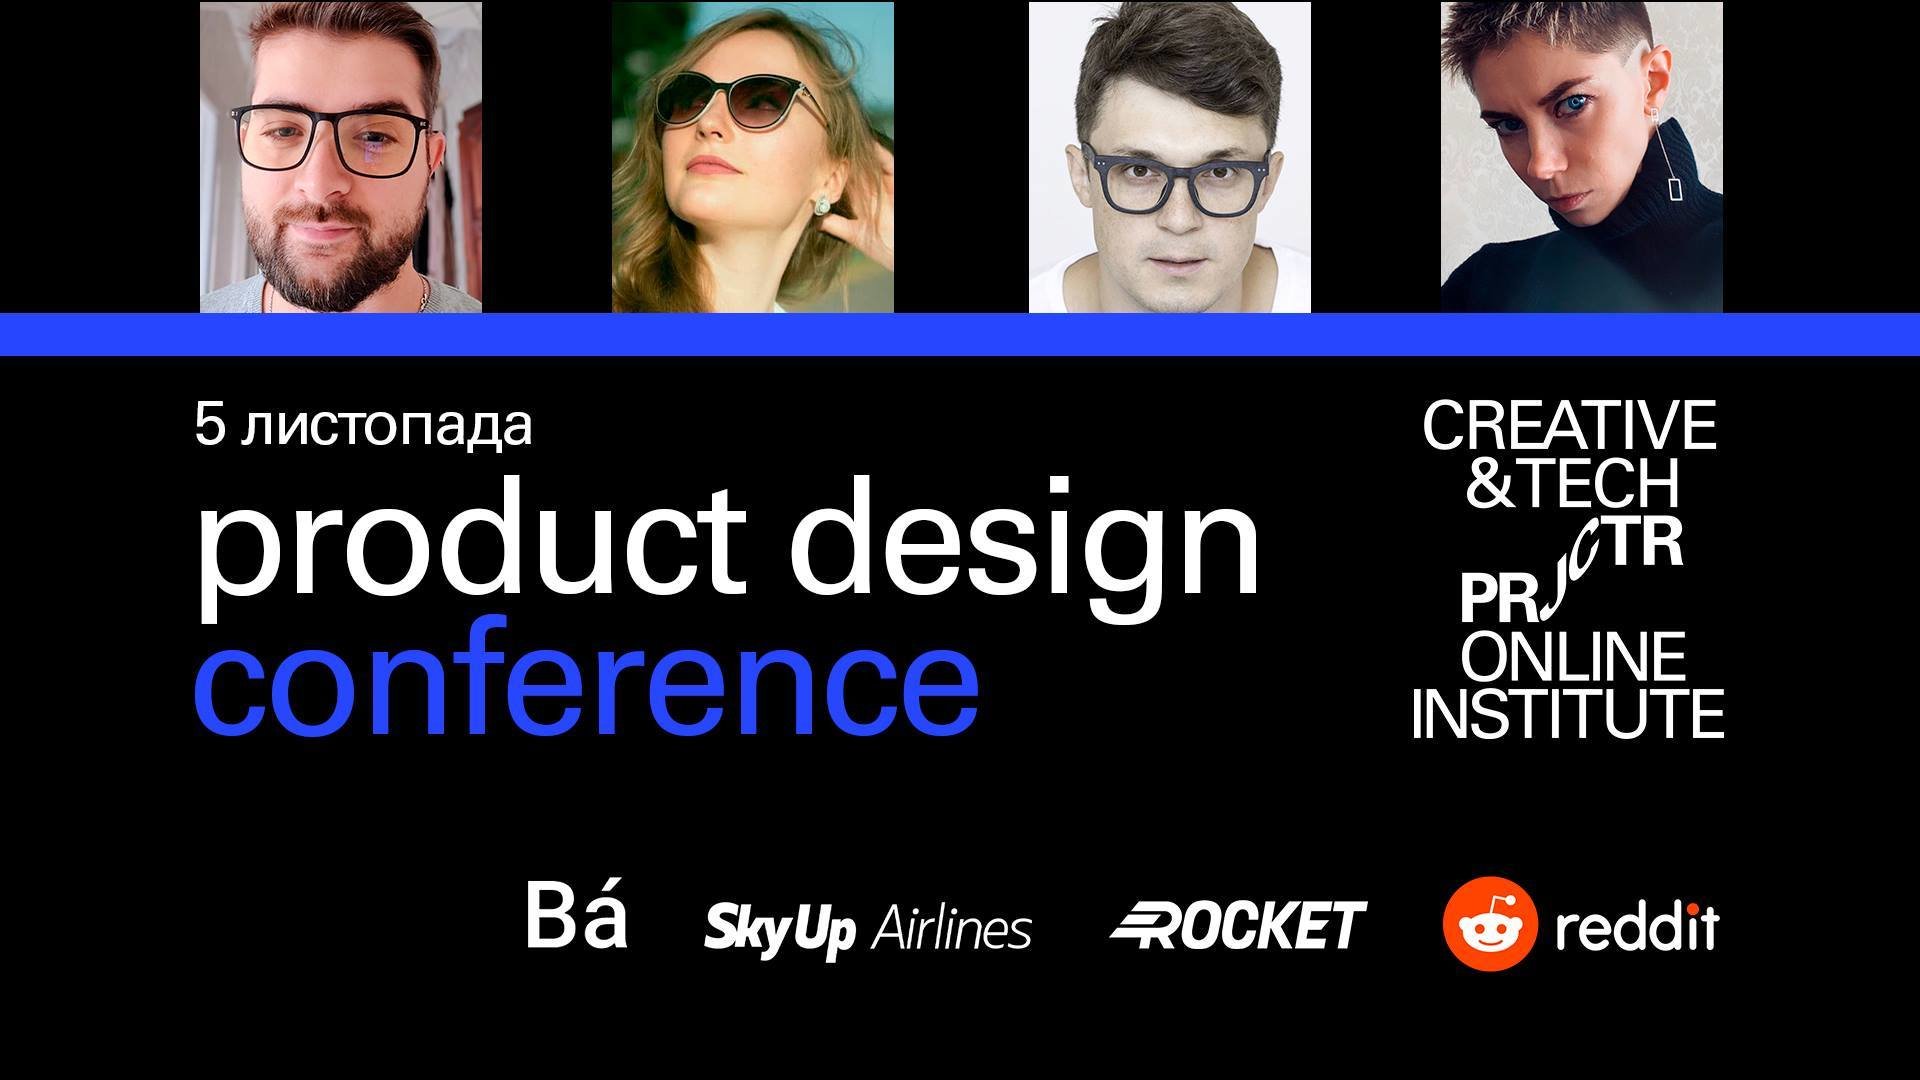 Product Design Conference/https://prjctr.com/library/video/product-design-conference